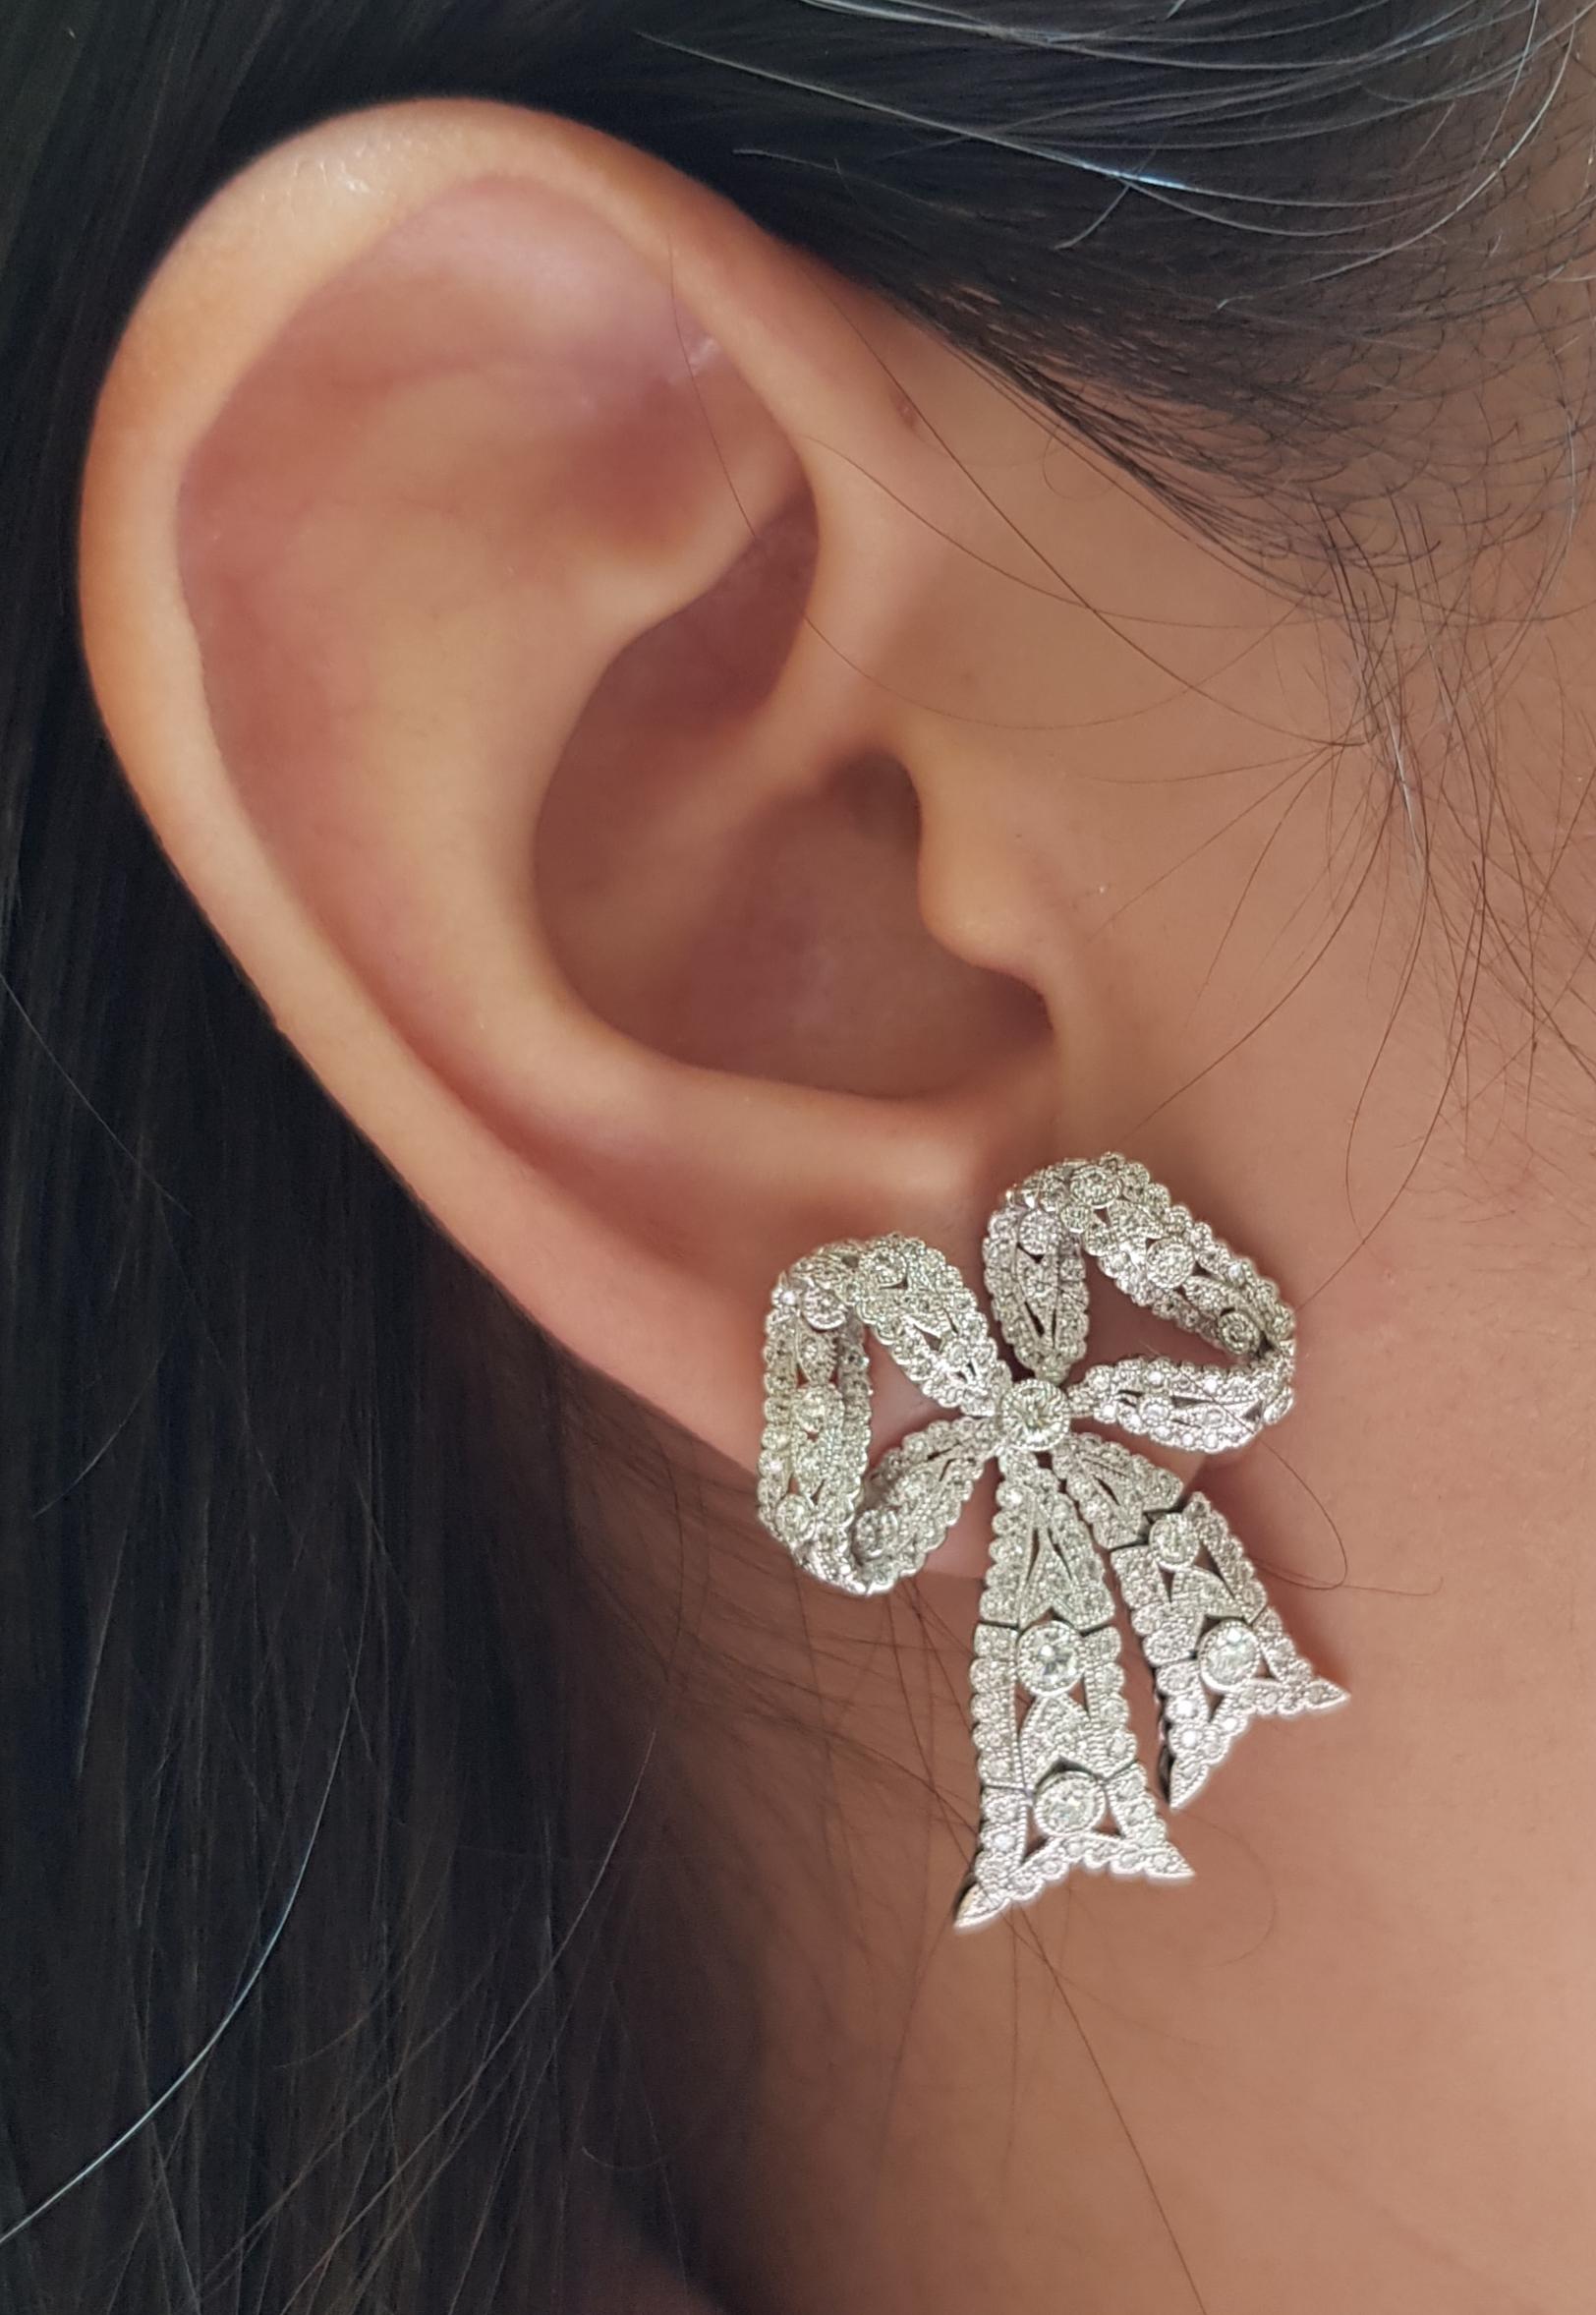 Diamond 1.88 carats Earrings set in 18 Karat White Gold Settings

Width:  2.3 cm 
Length: 3.1 cm
Total Weight: 15.71 grams

